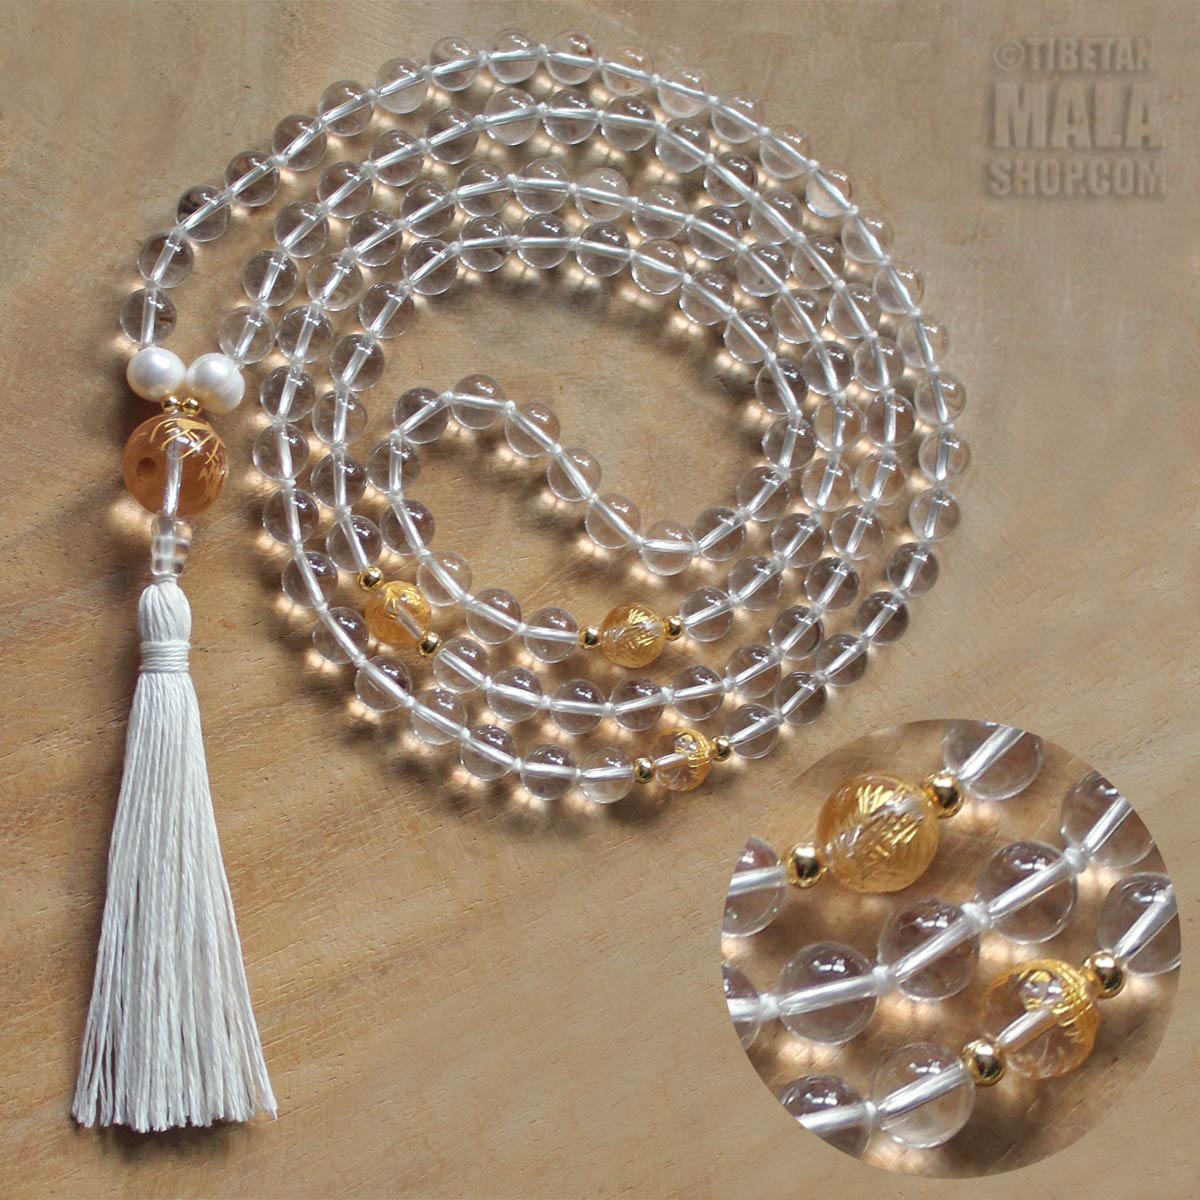 Clear Quartz Mala Beads Necklace - I am Limitless